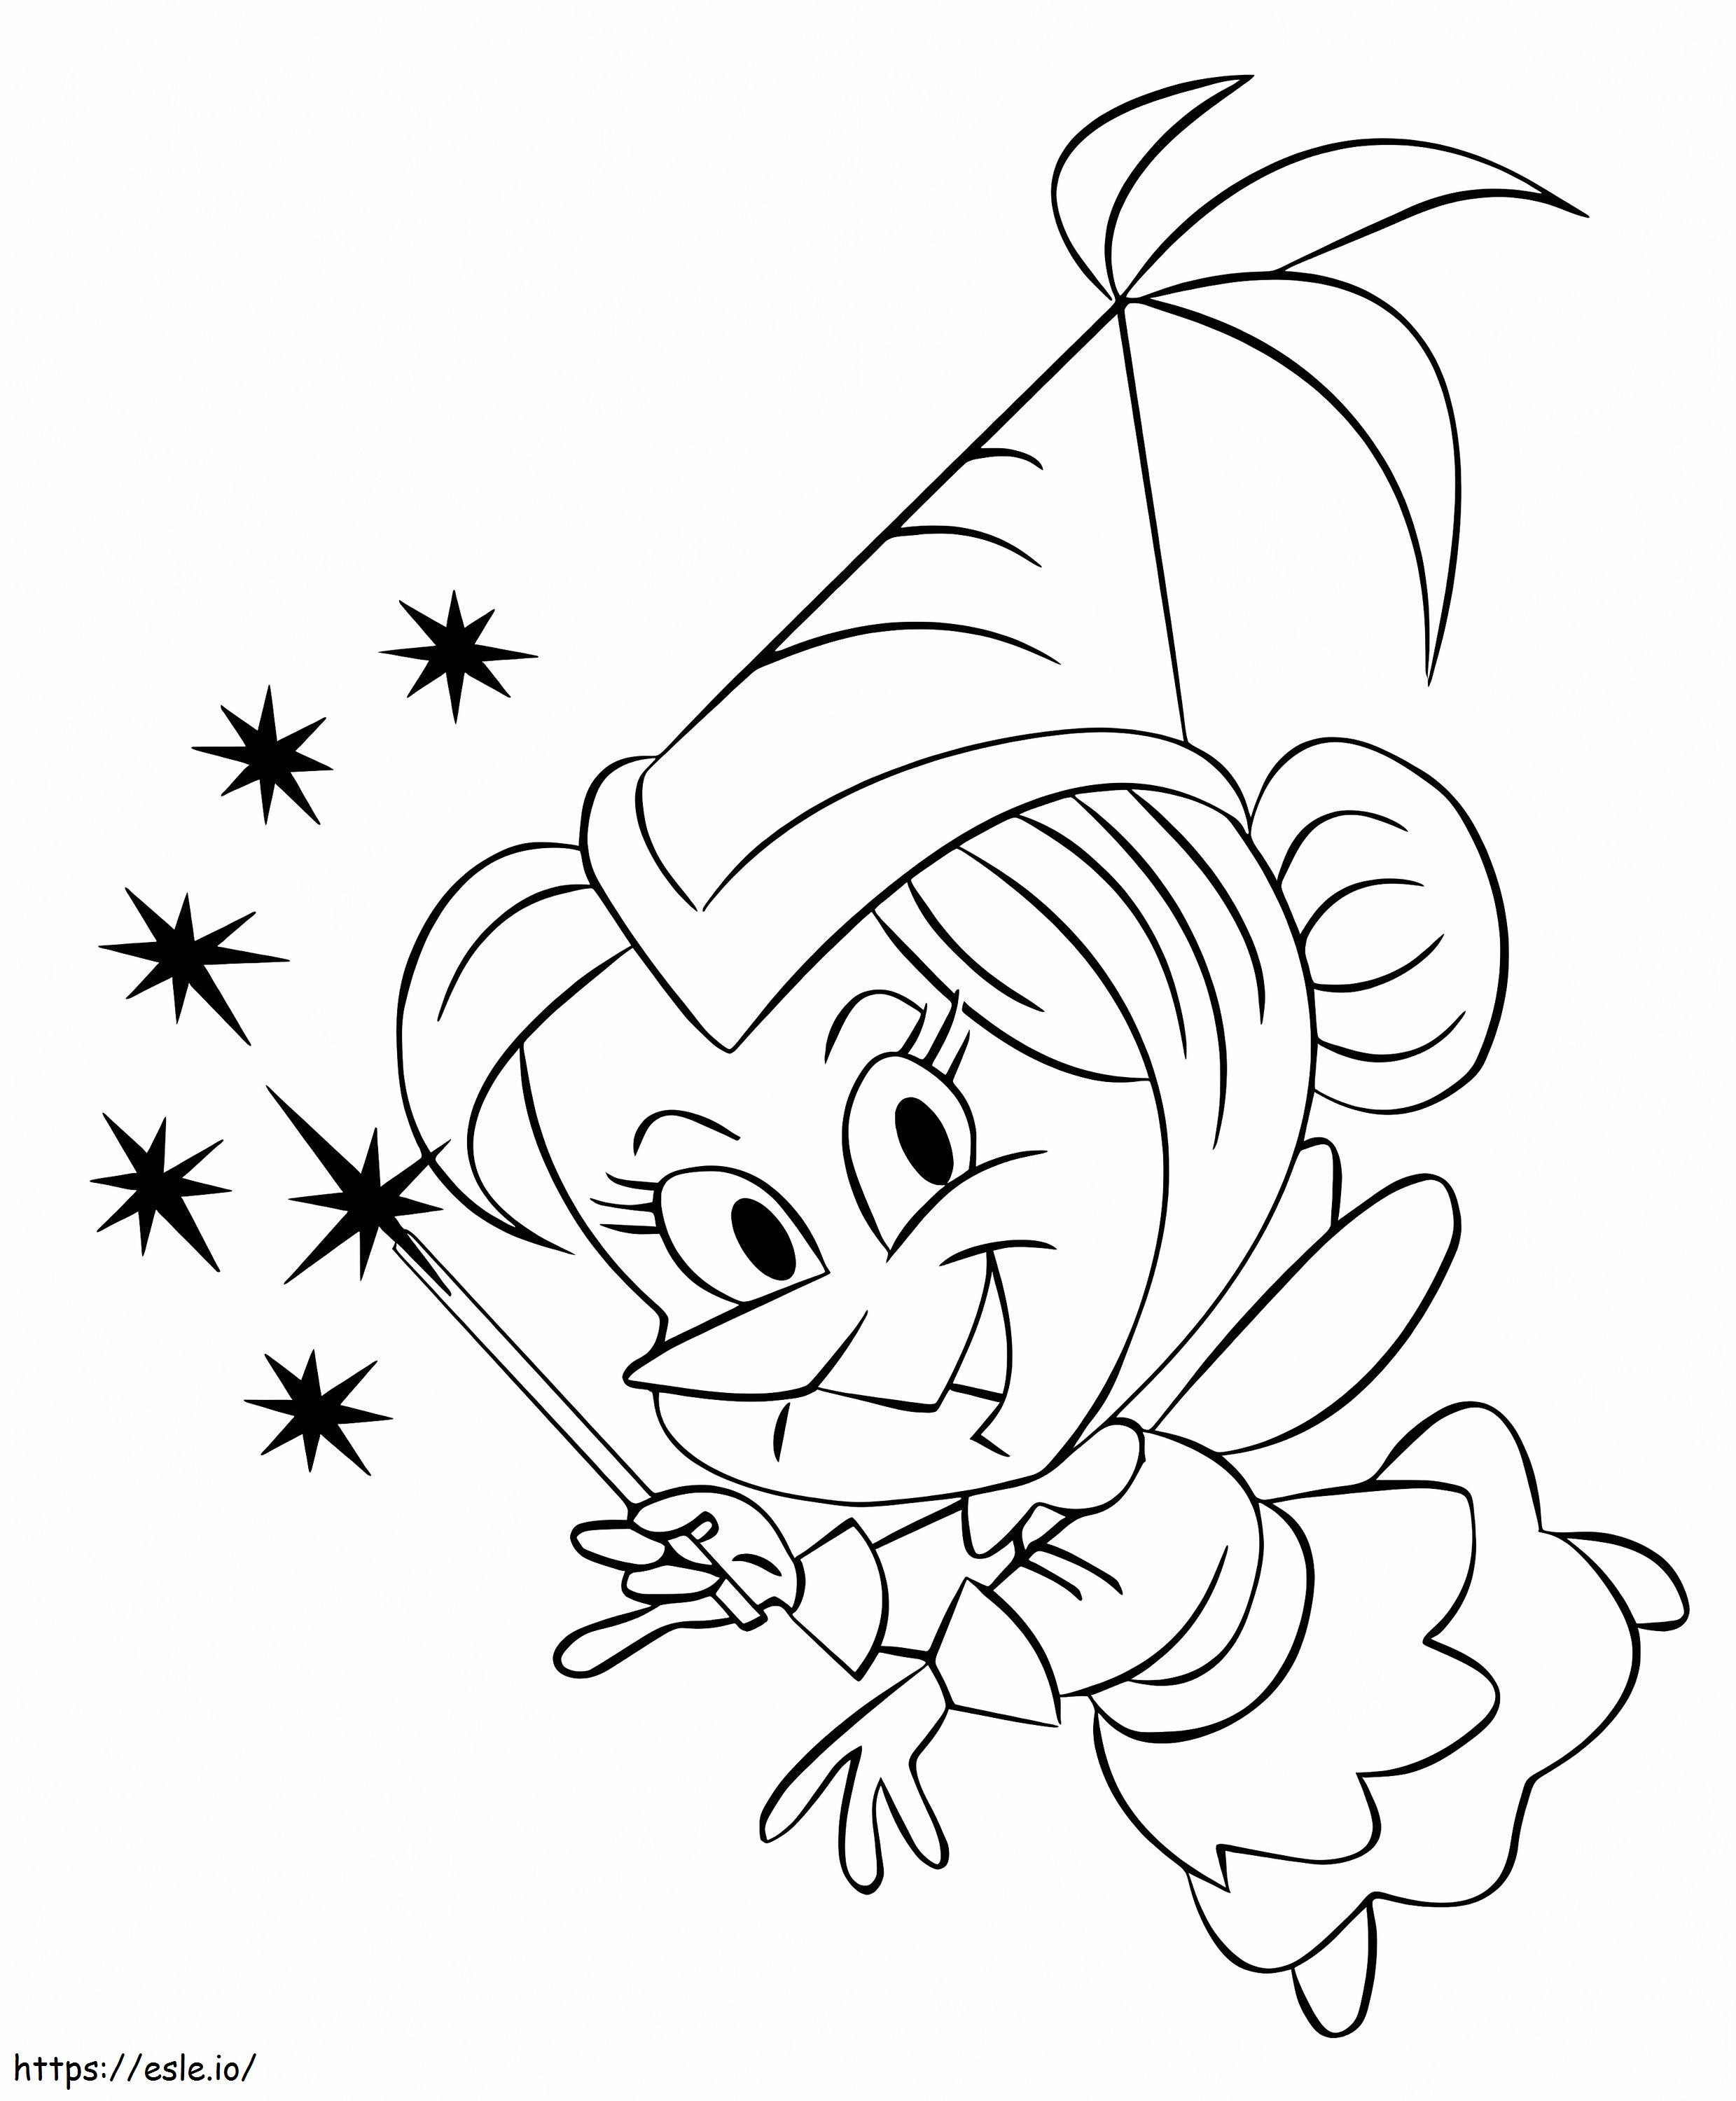 Cartoon Fairy coloring page